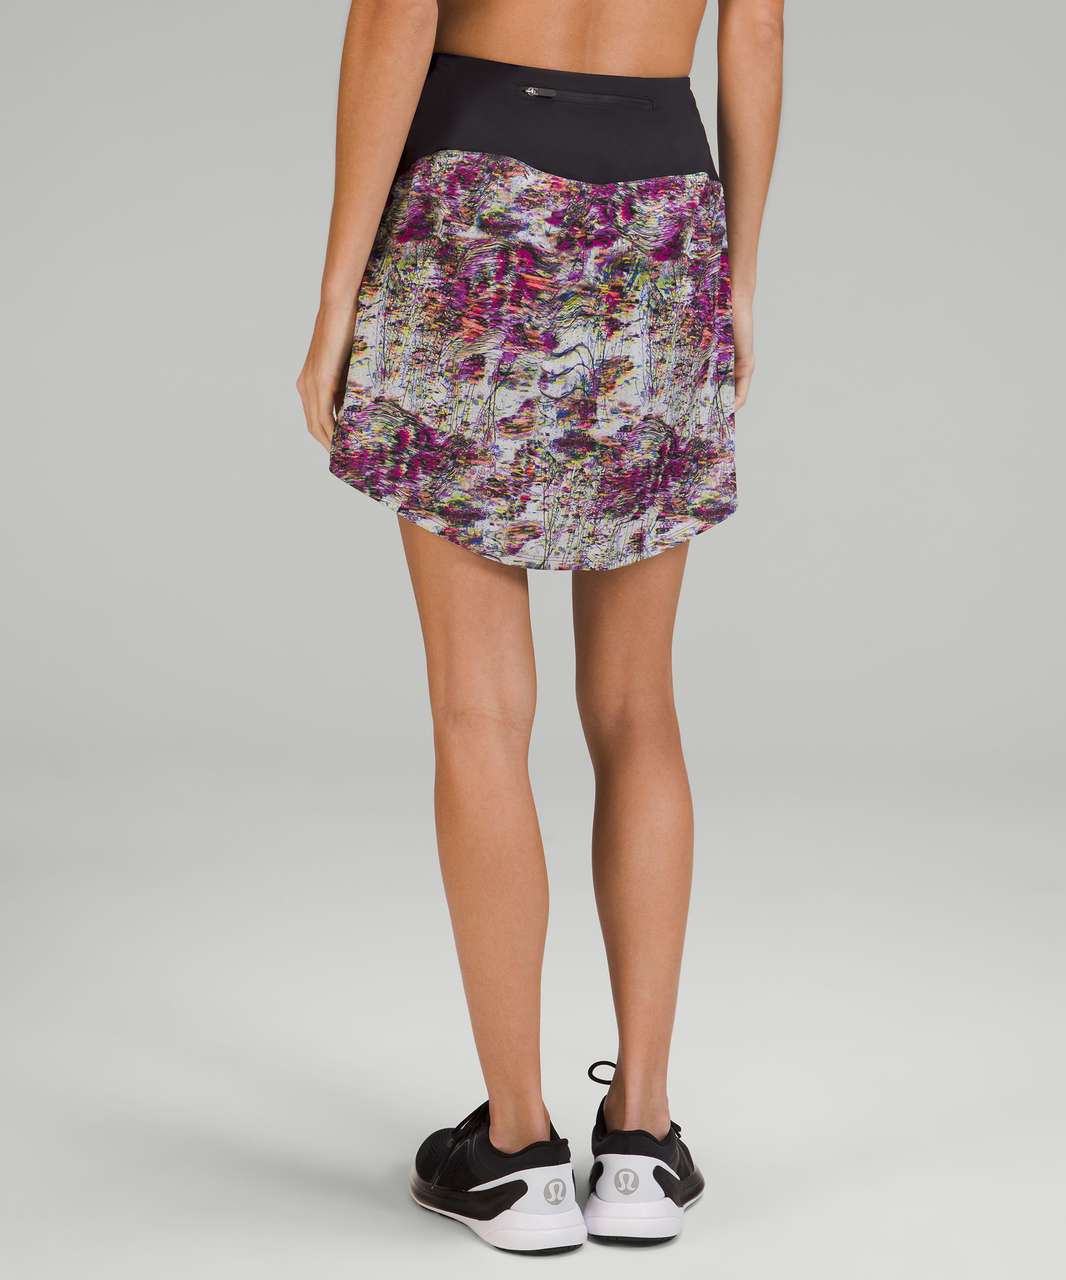 Lululemon Limited Edition Swift High-Rise Long Running Skirt - Firework Floral Multi / Black